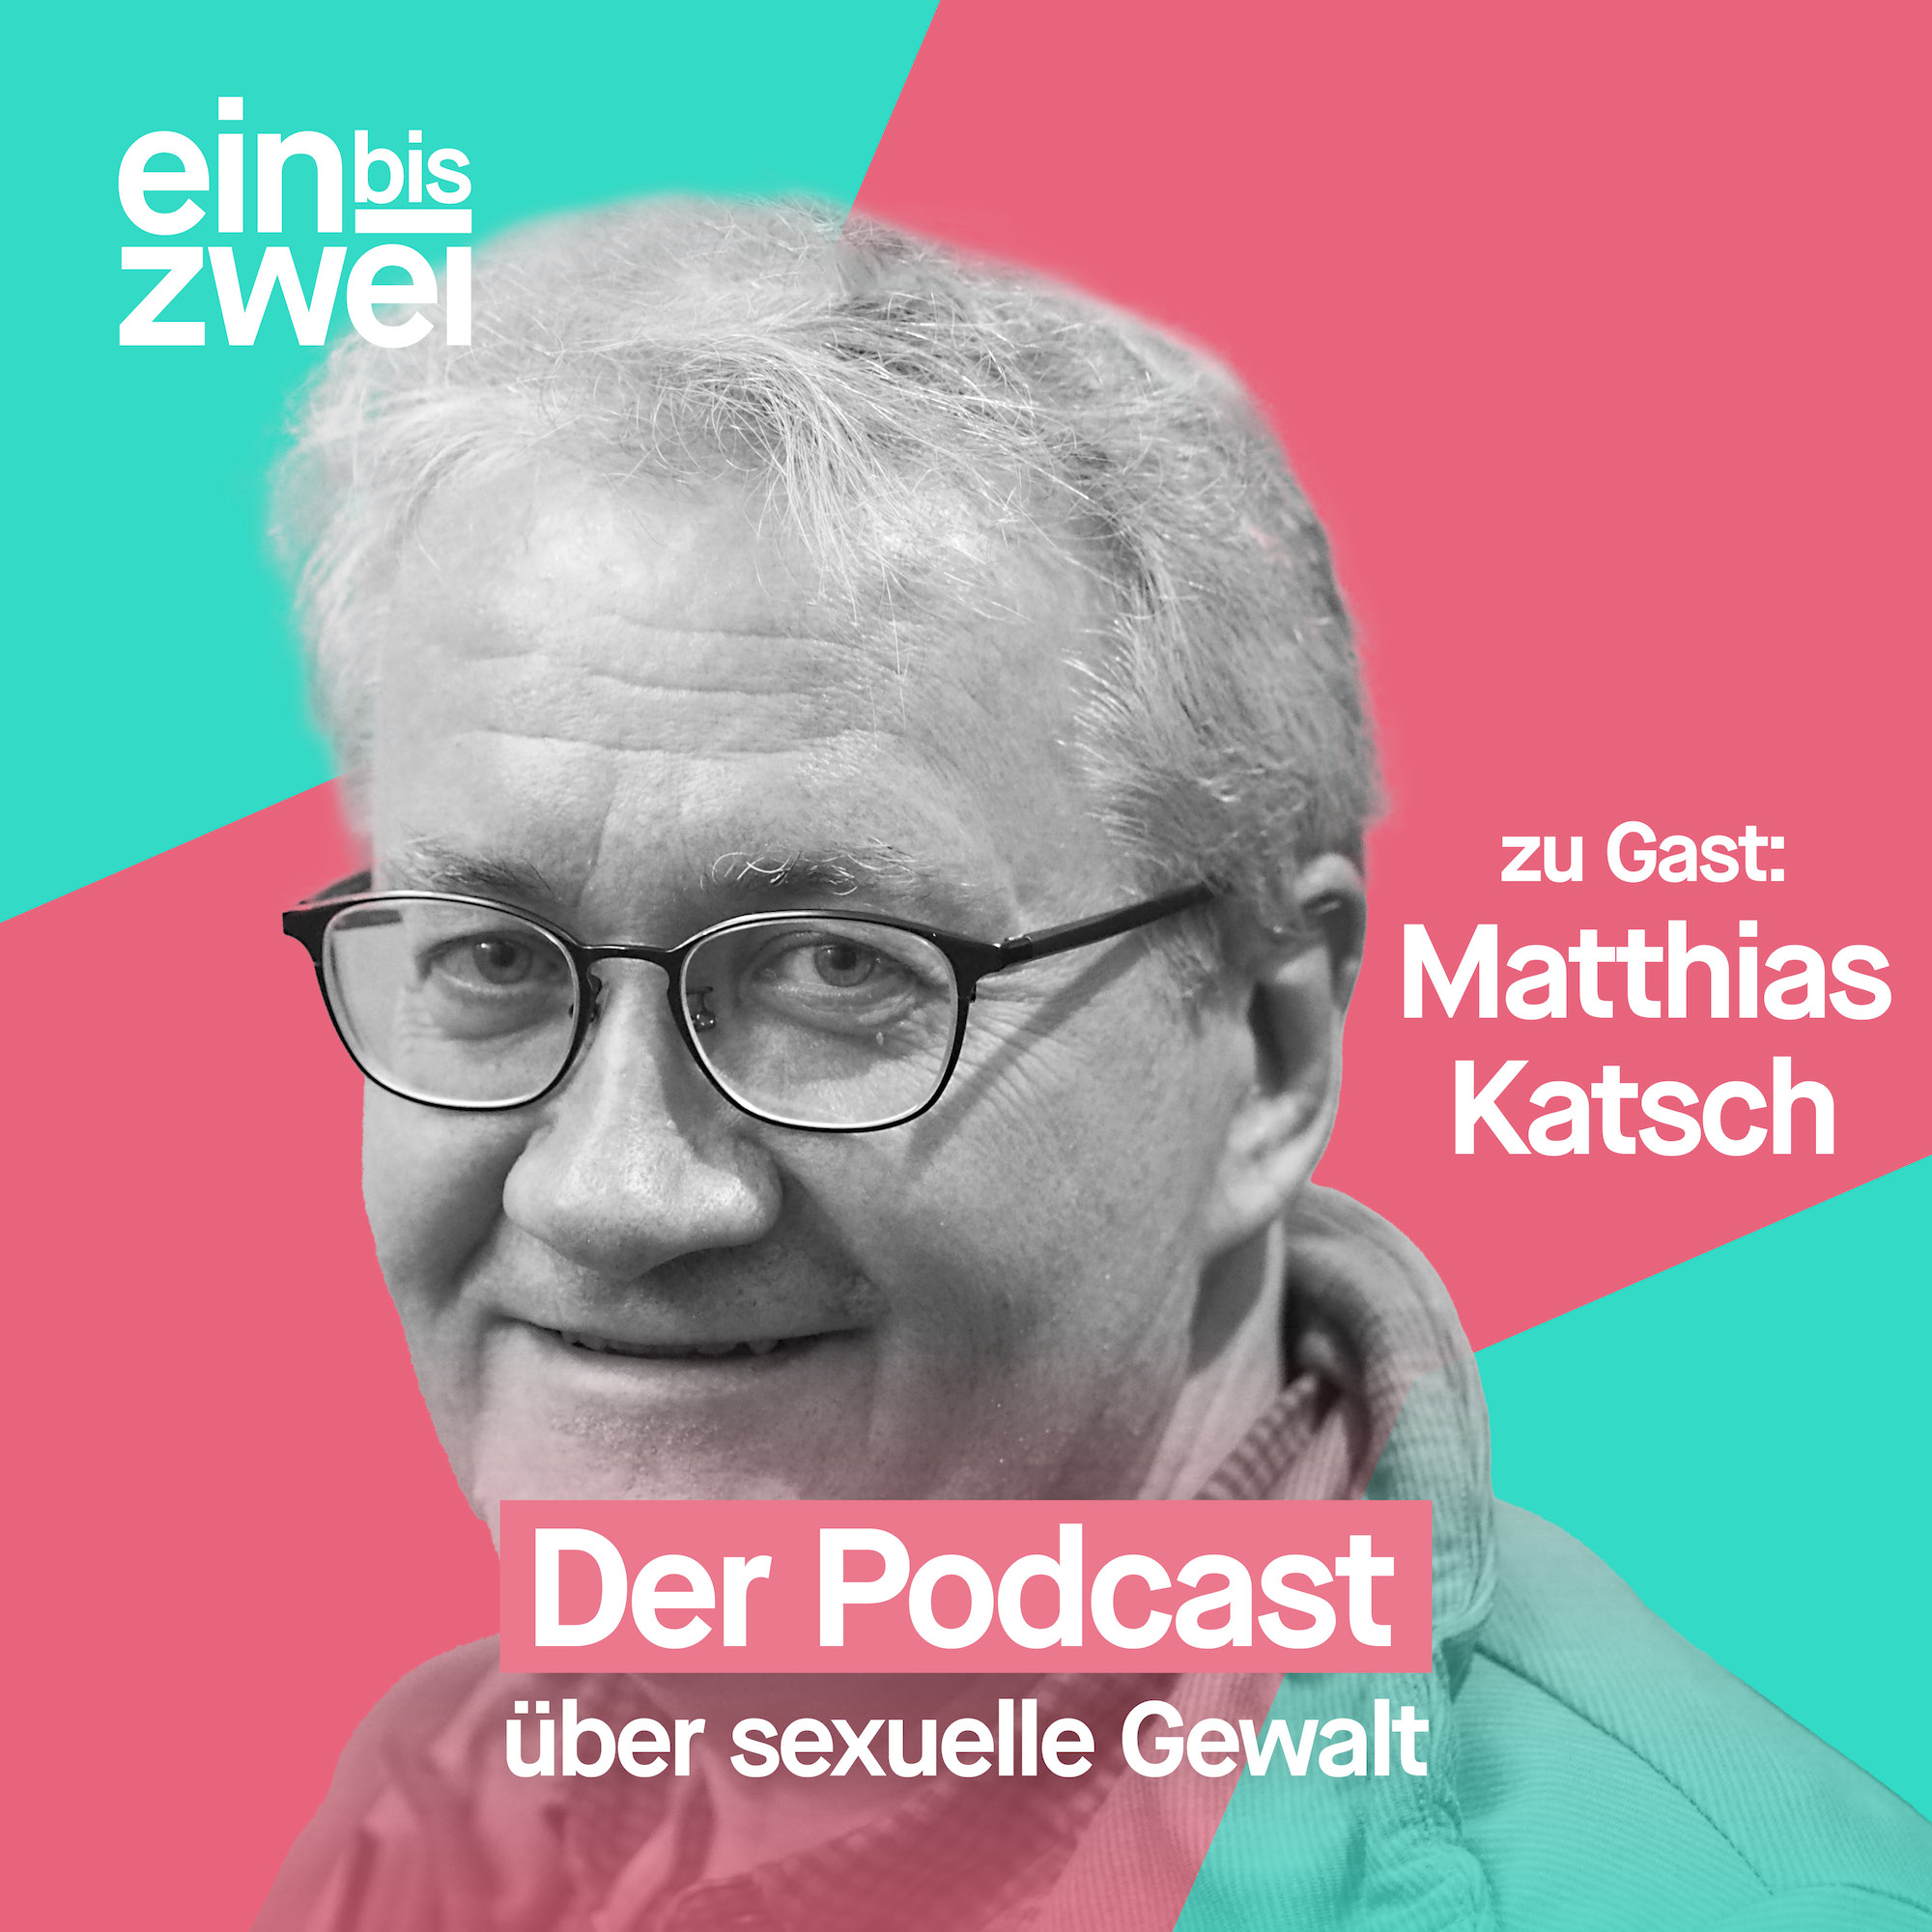 Matthias Katsch